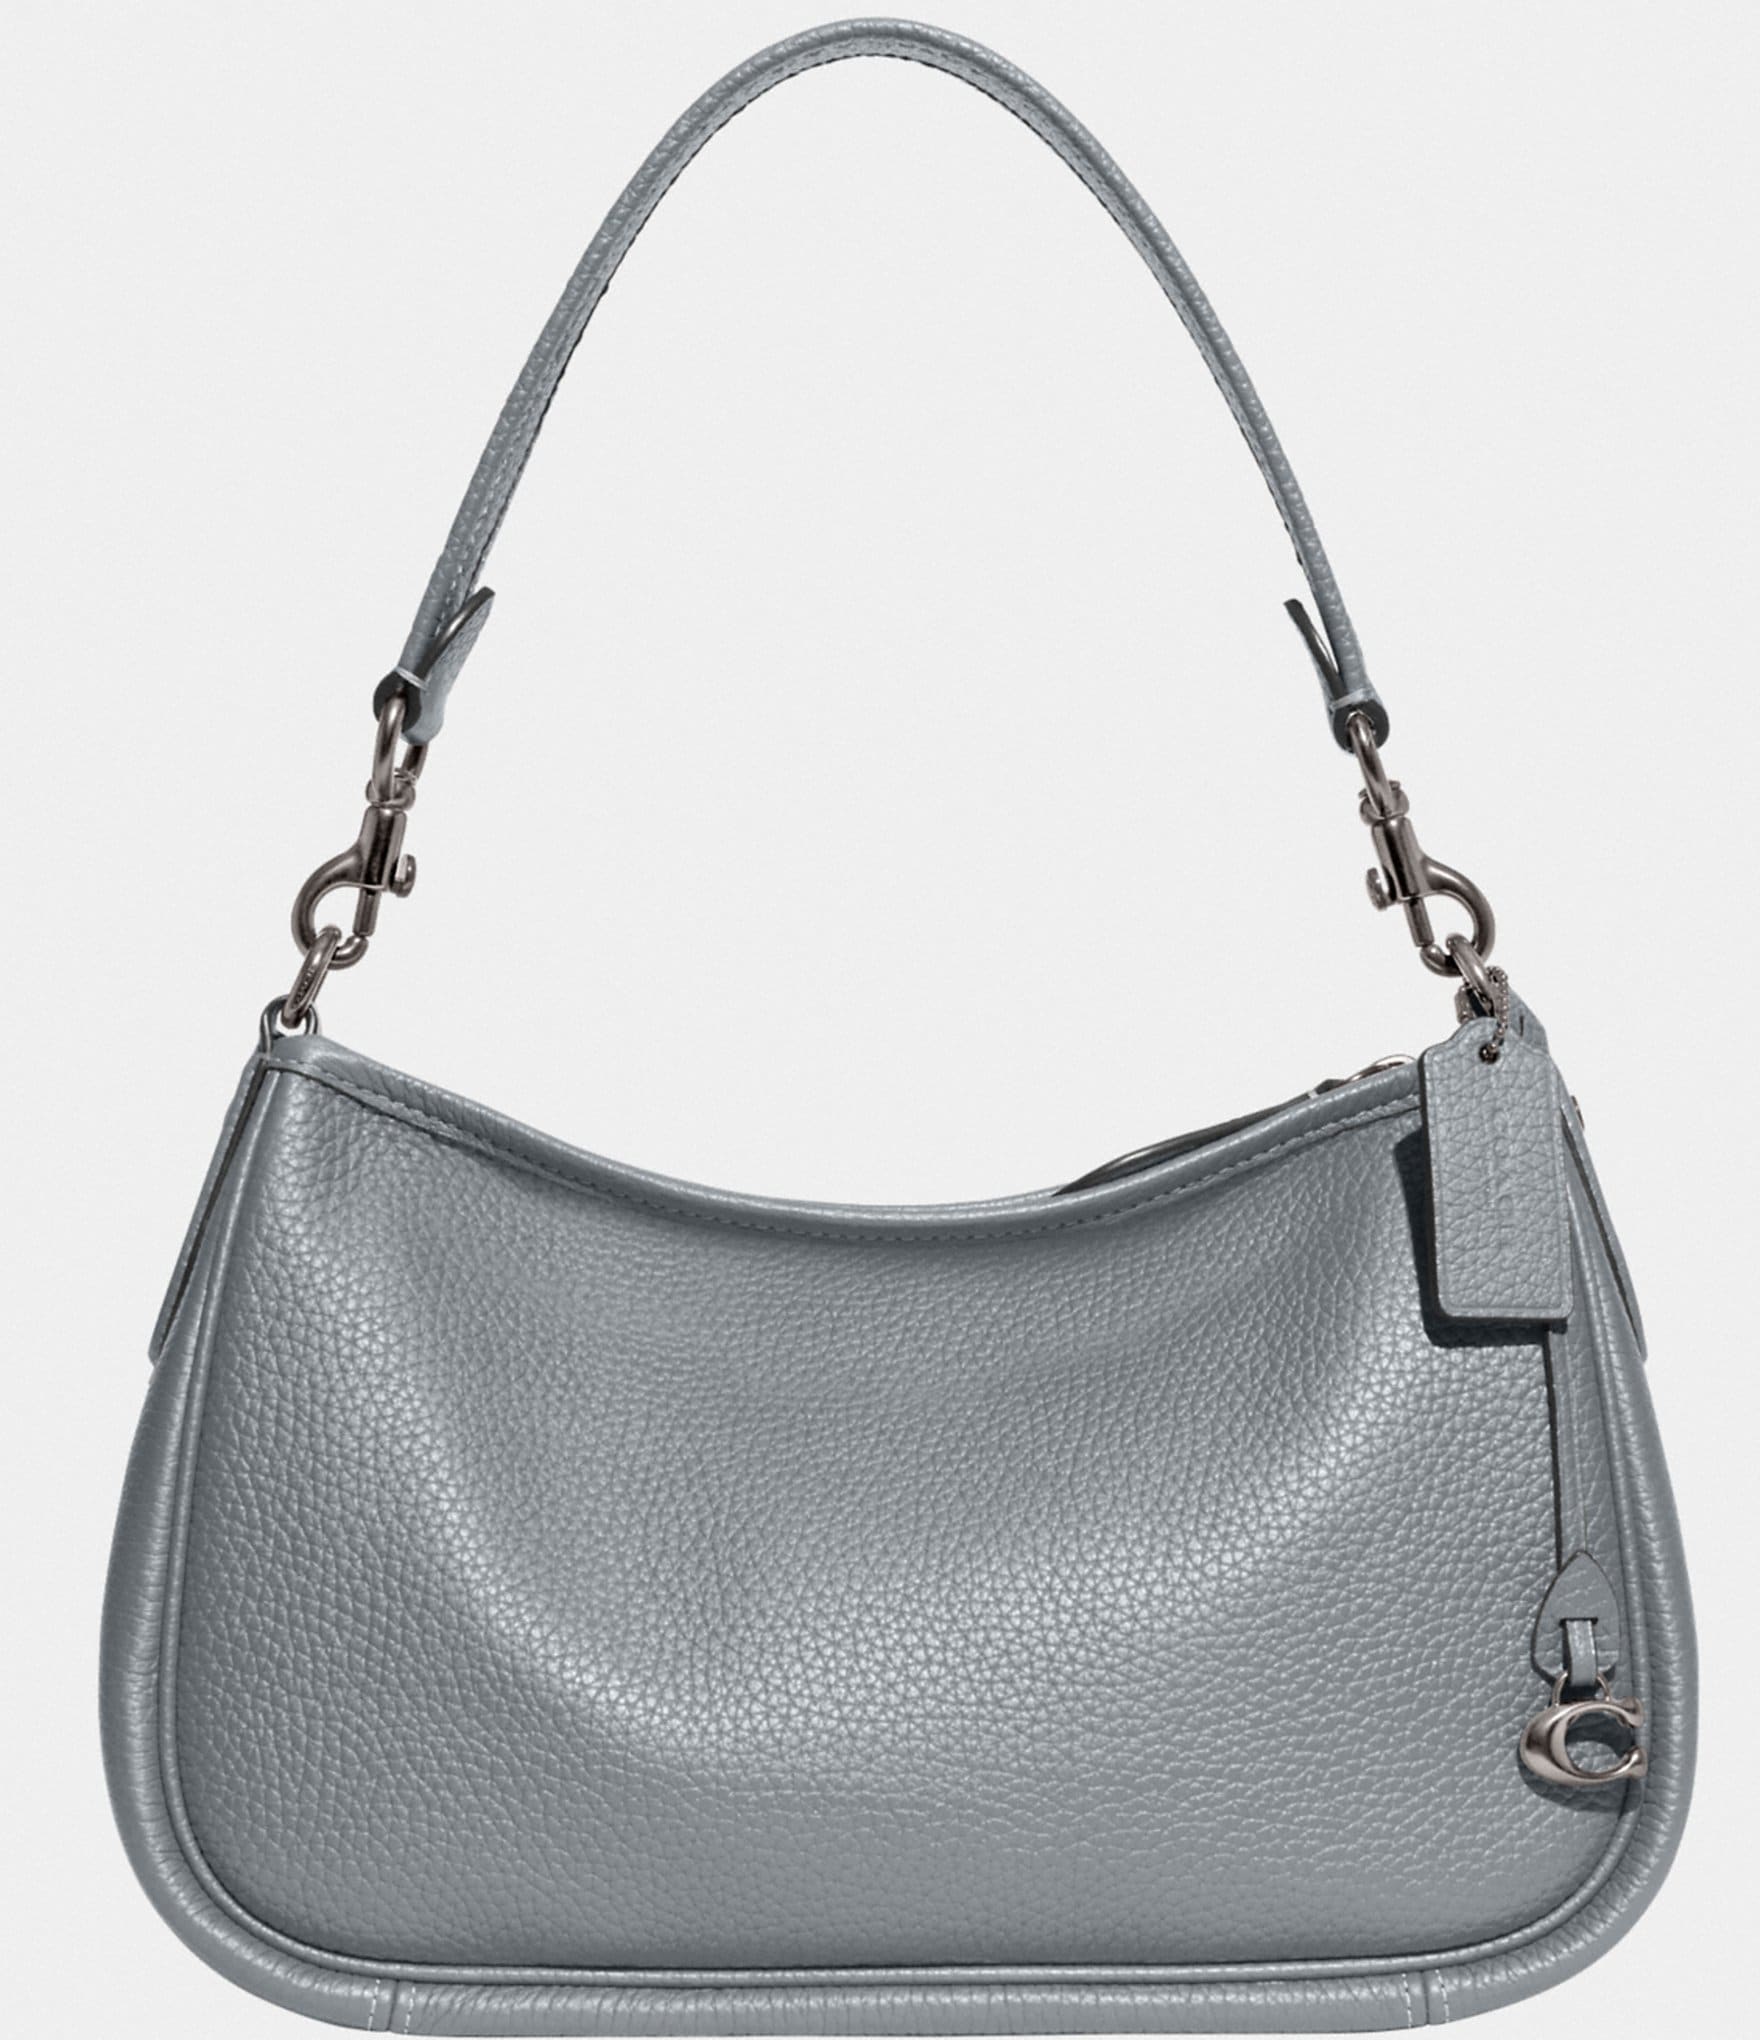 Handbags, Purses & Wallets | Dillard's